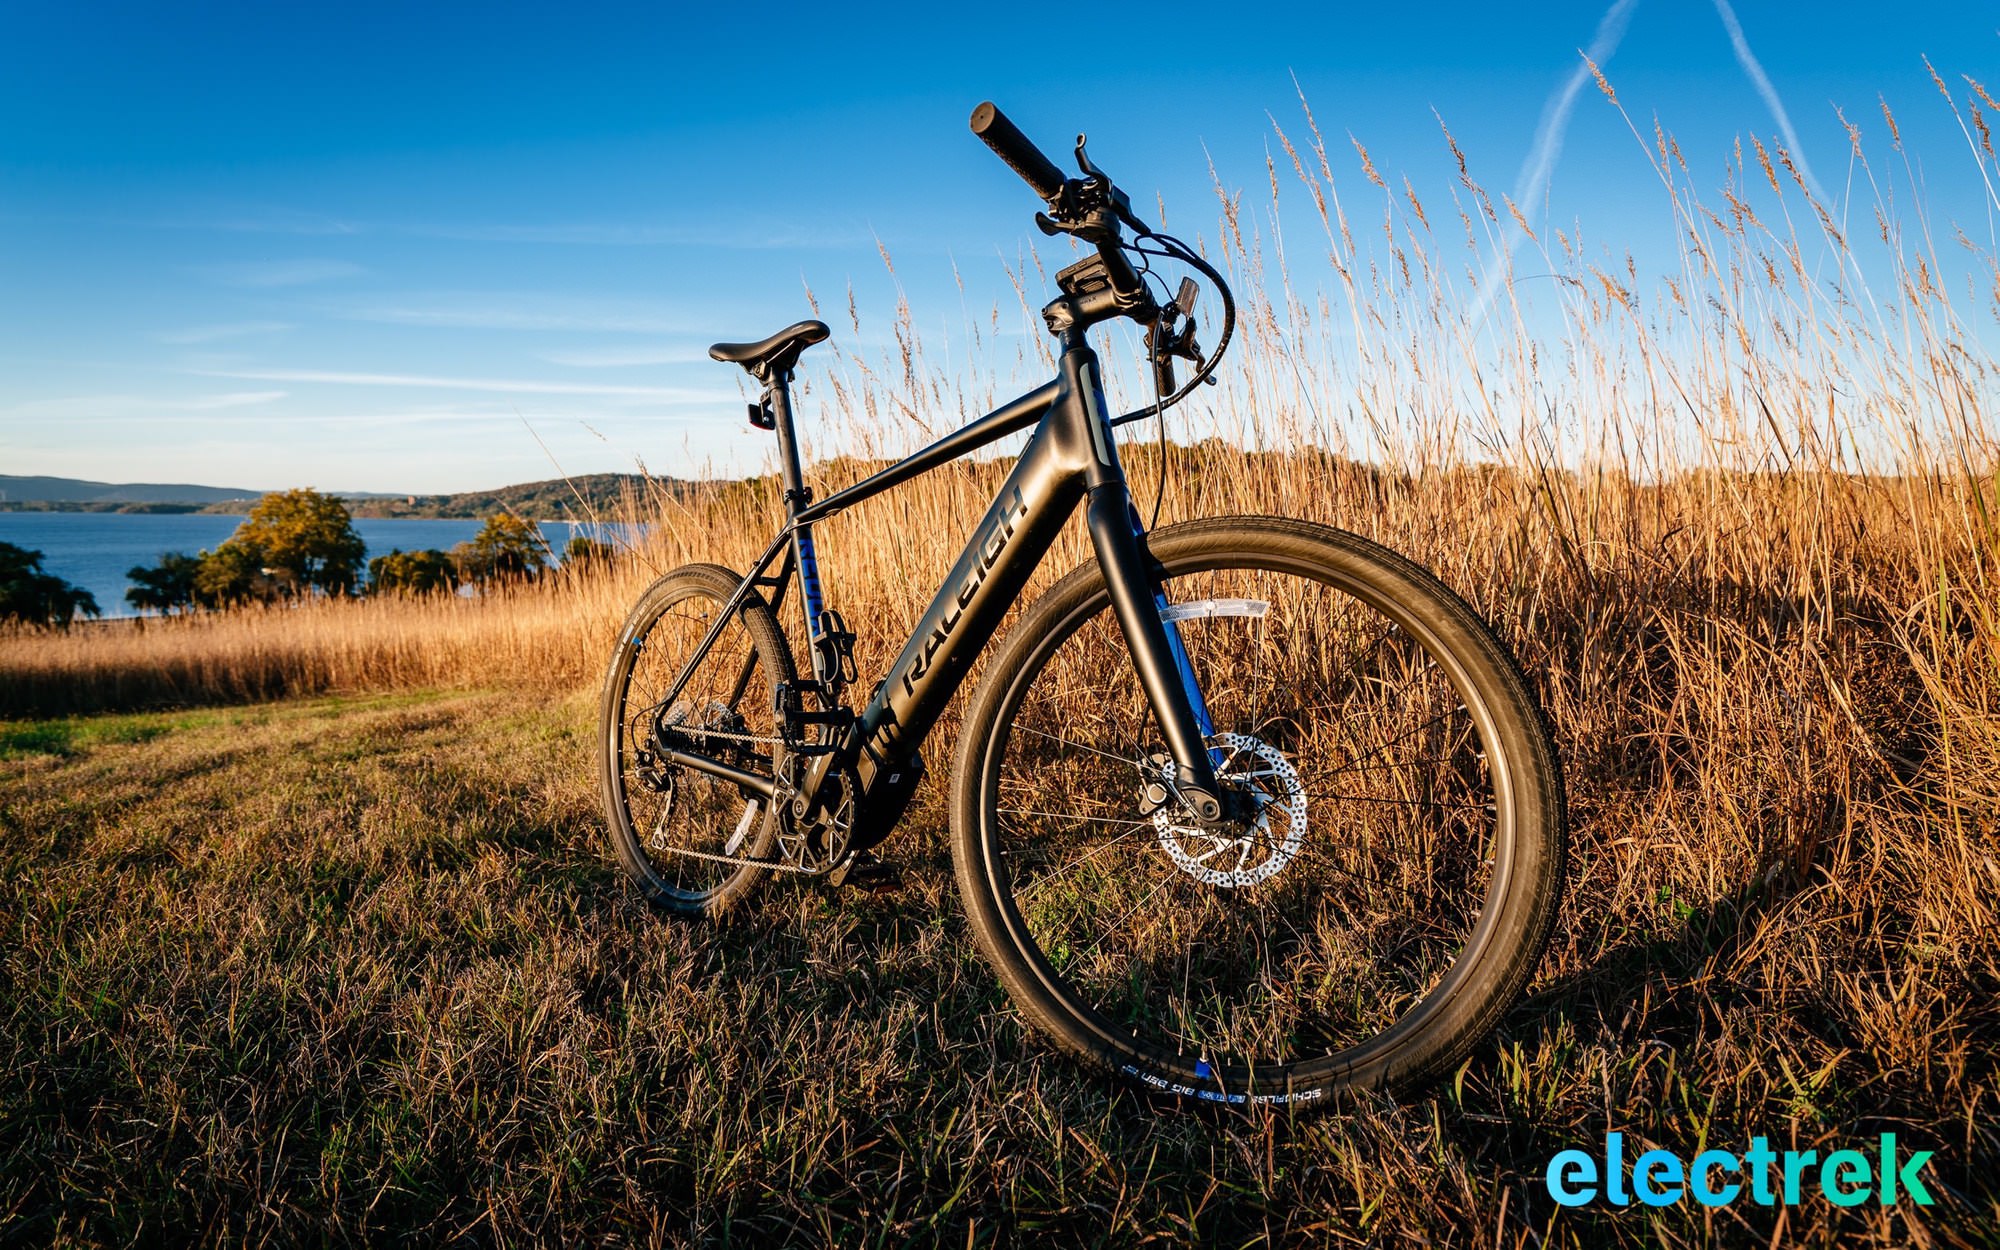 The Electrek Review Raleigh Redux IE w/Brose drivetrain the new electric commuter bike benchmark? Electrek